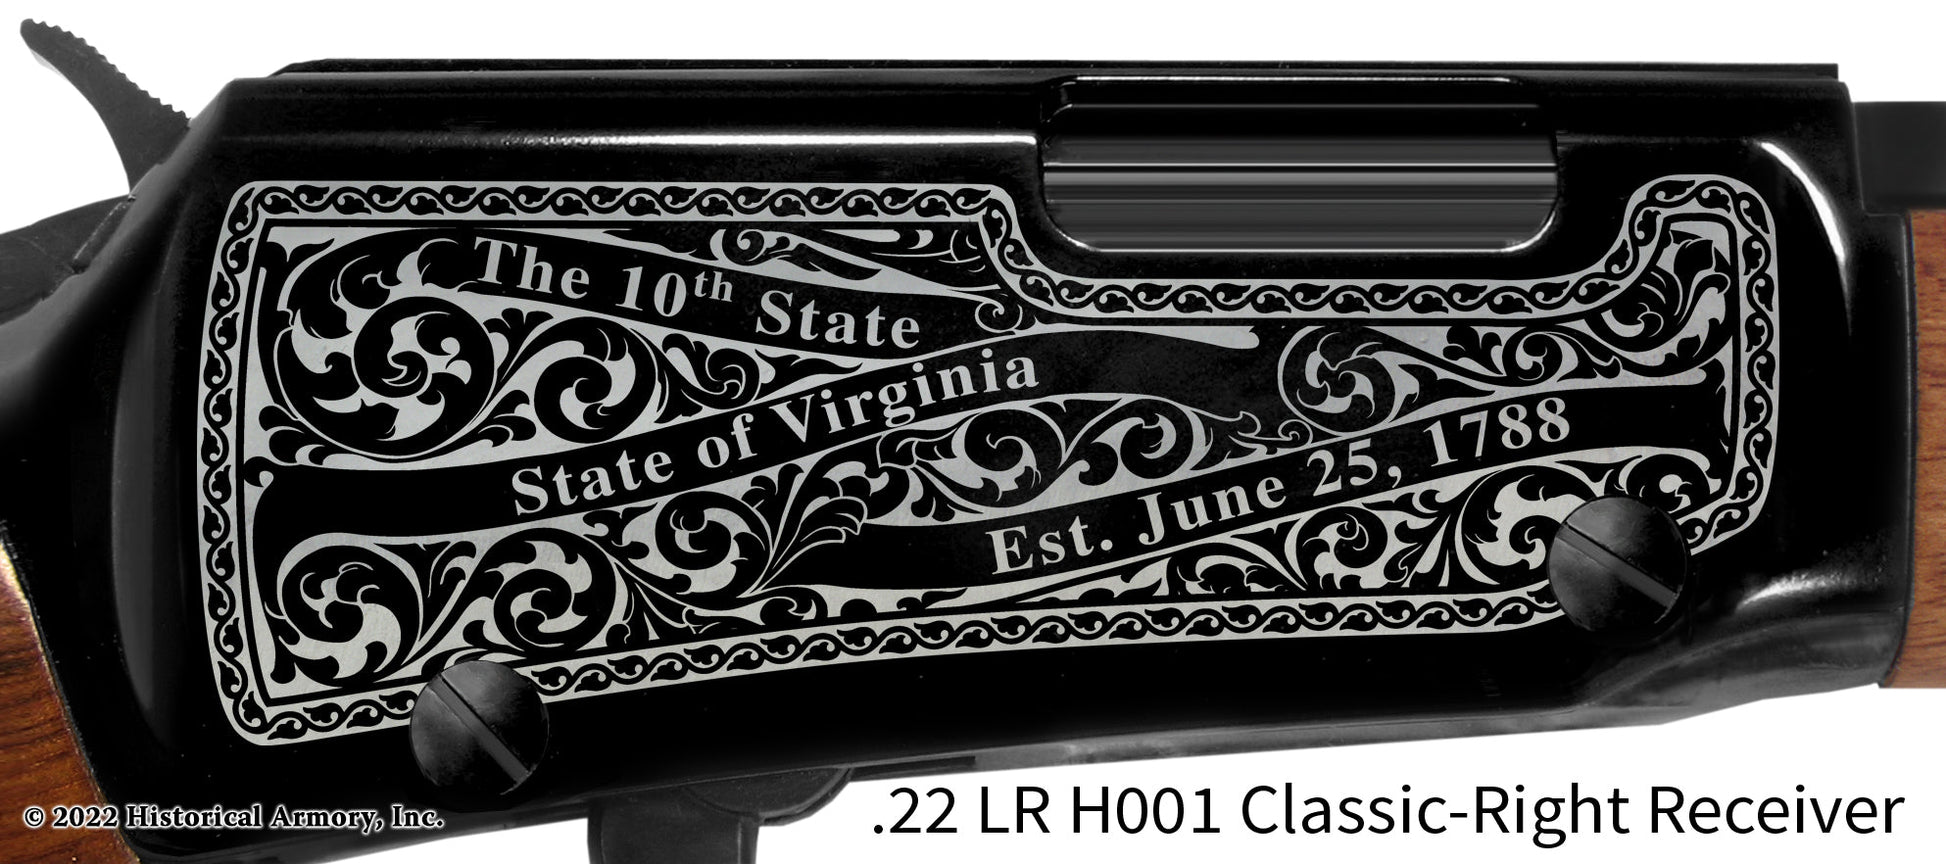 York County Virginia Engraved Henry H001 Rifle